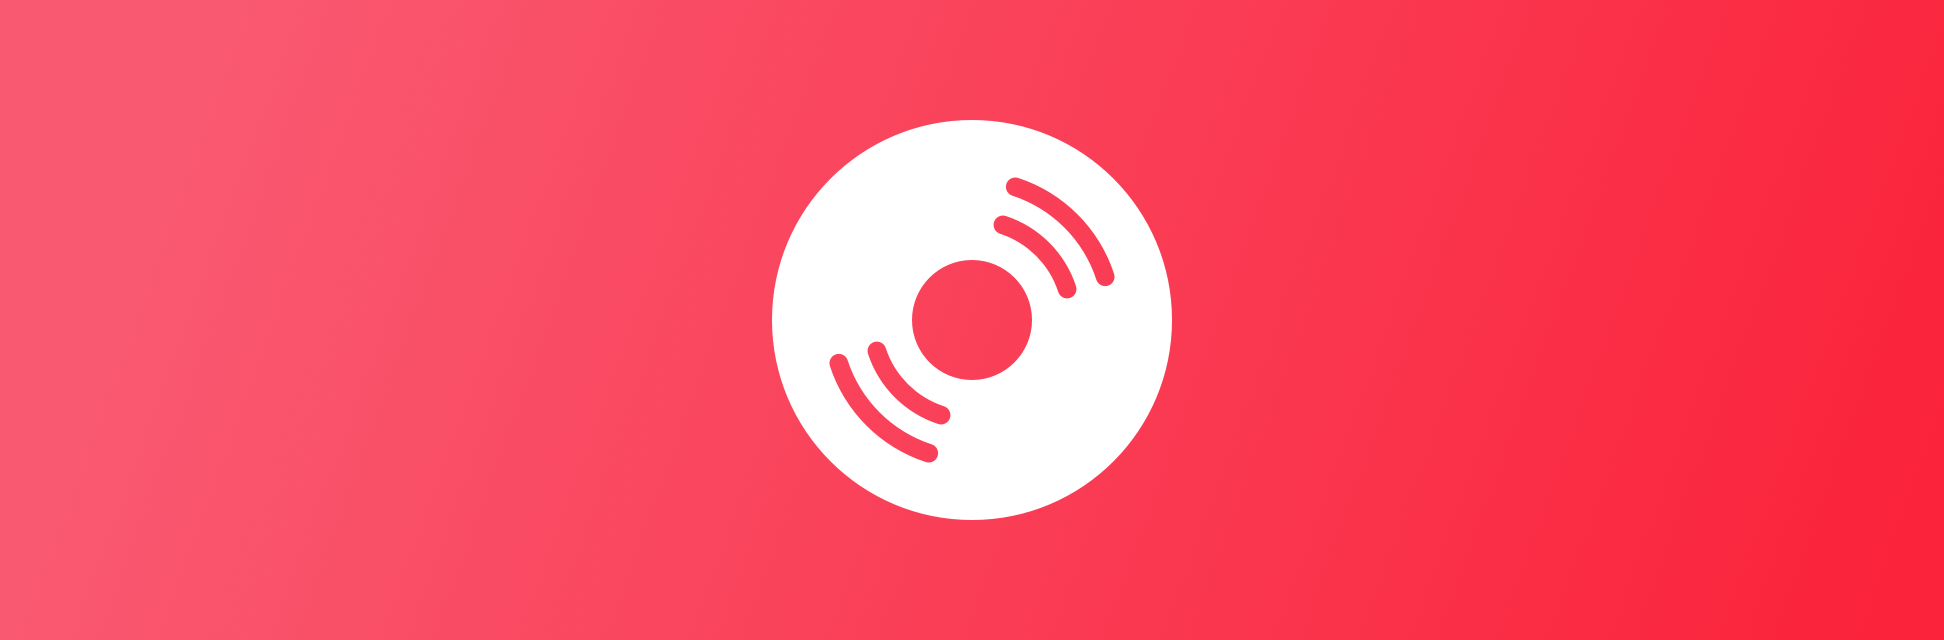 Apple Music enhanced app brings better listening experience